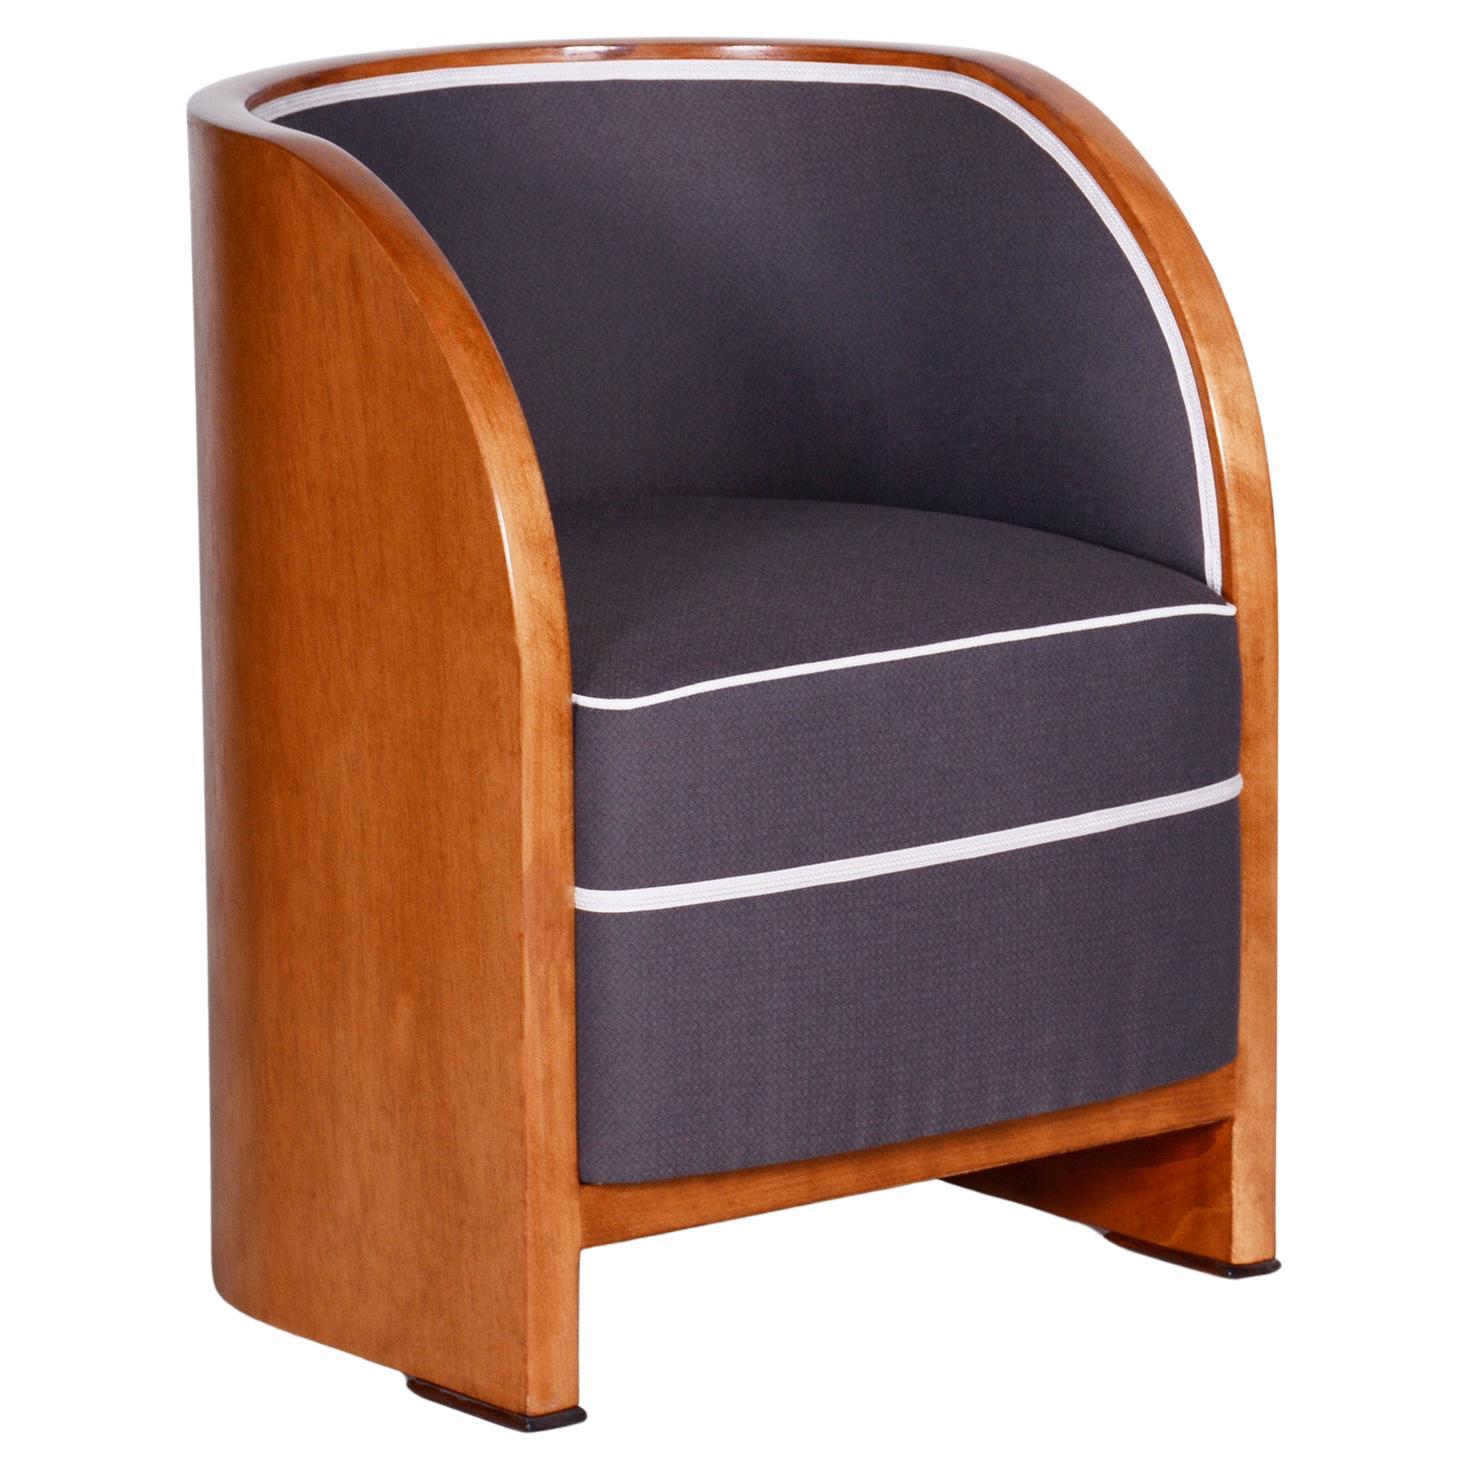 Restored Art Deco Armchair, Mahogany Veneer, Beech Solid Wood, France, 1940s For Sale